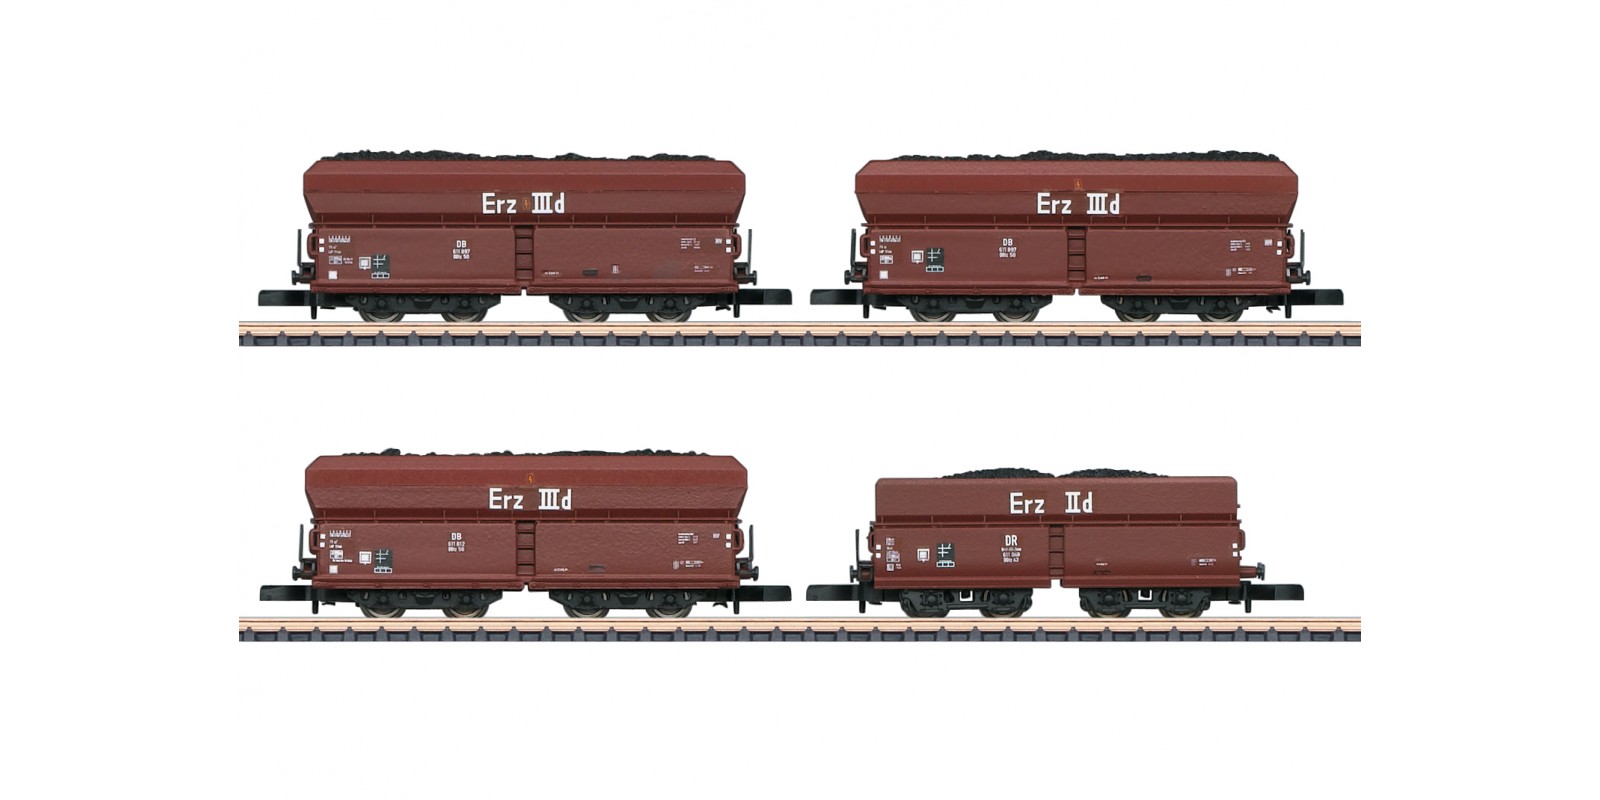 86307 "Coal Traffic" Freight Car Set